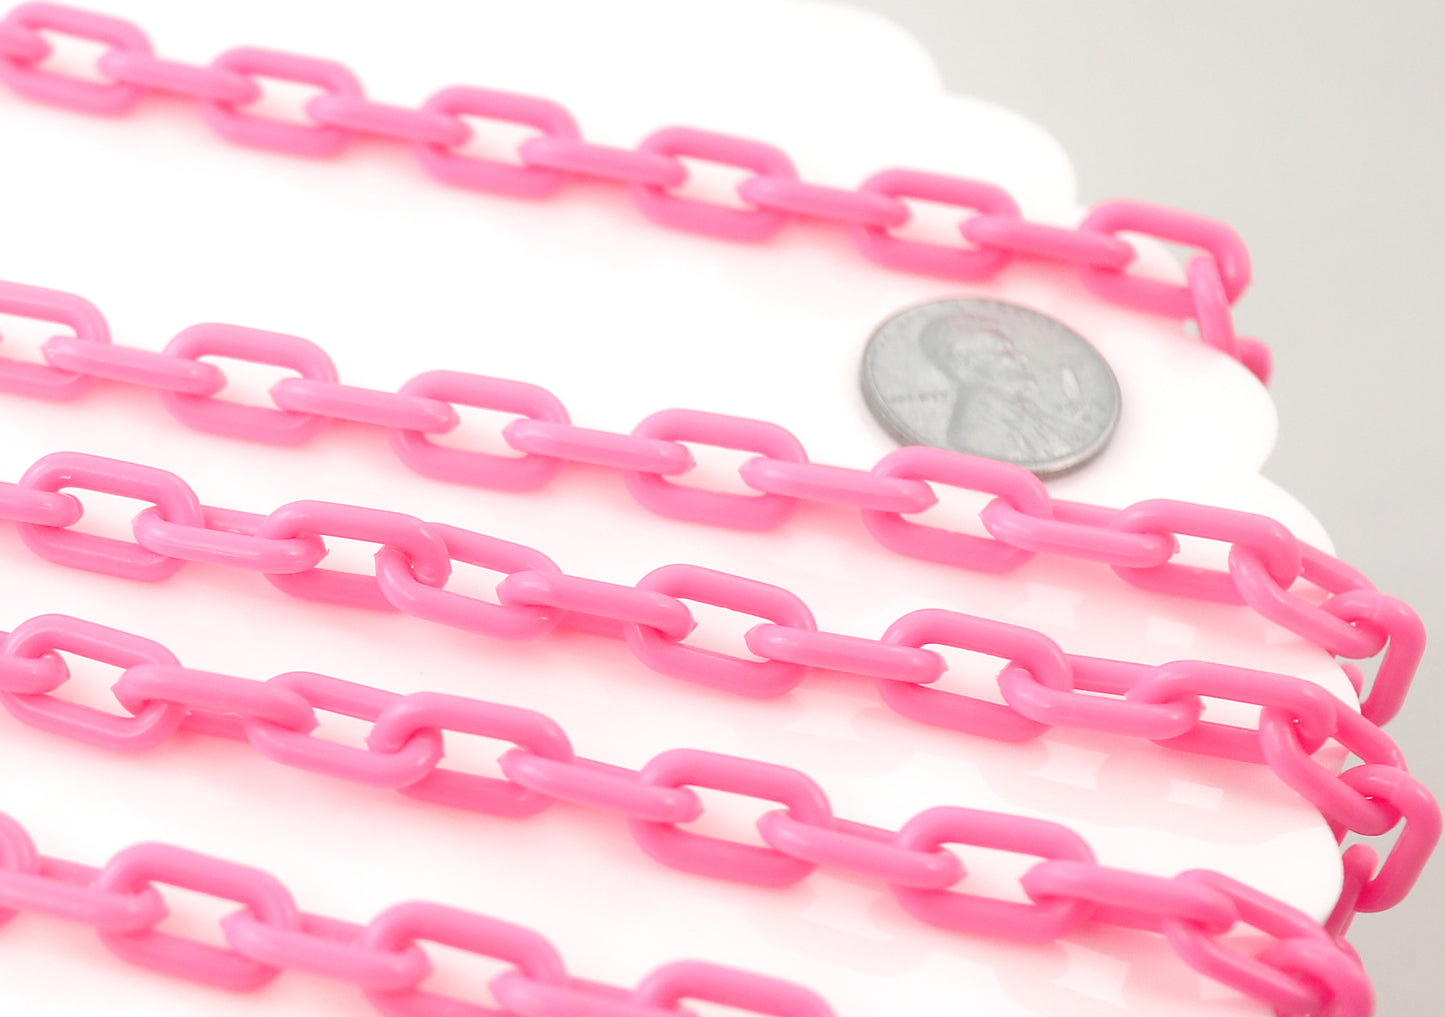 Plastic Chain - 14mm Bright Pink Acrylic or Plastic Chain - 15 inch length / 38 cm length - 3 pcs set